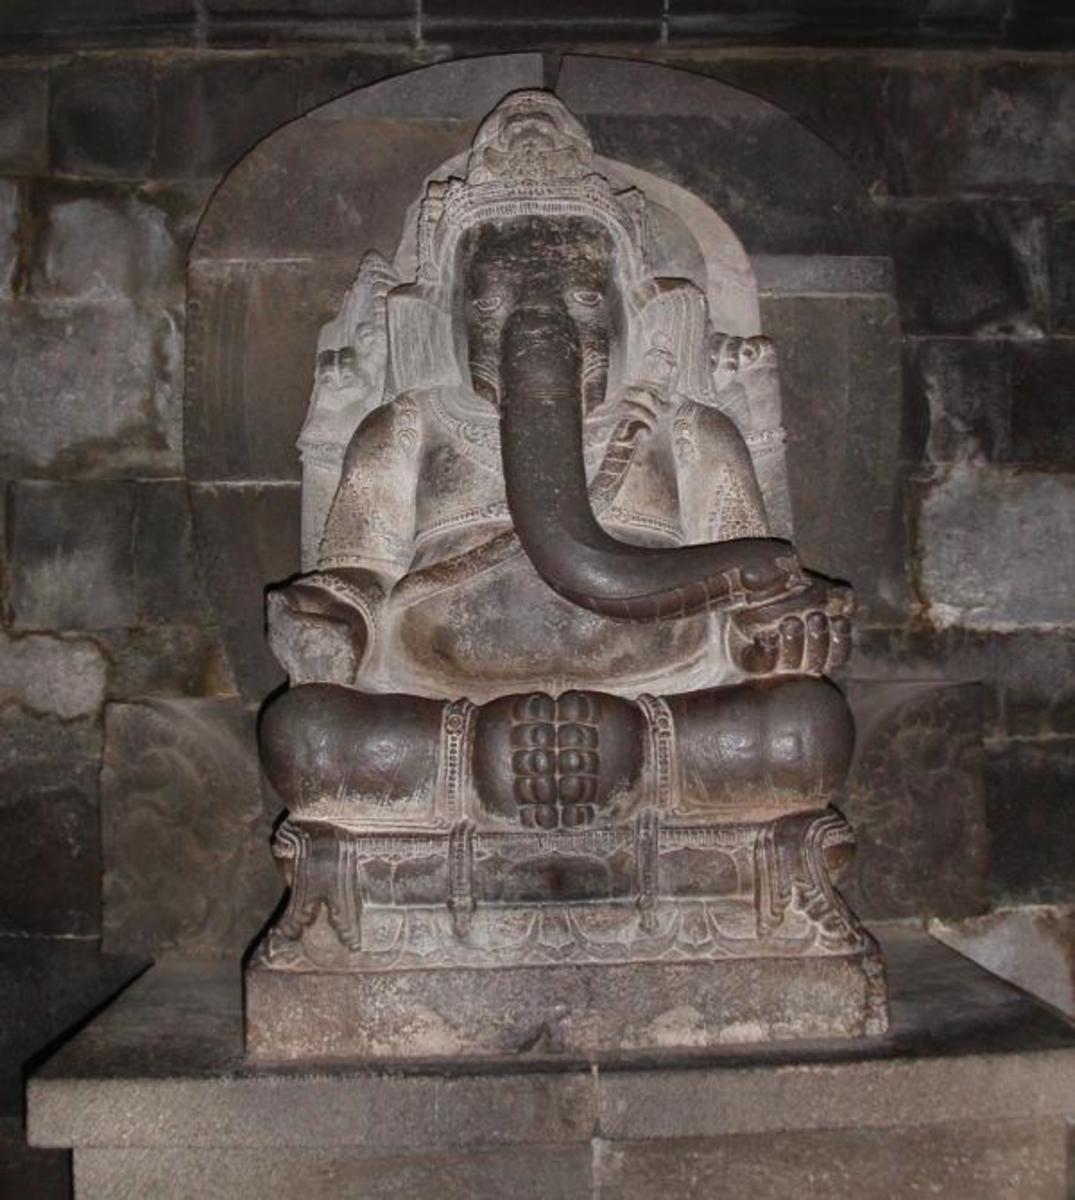 Lord Ganesh in Bali temple